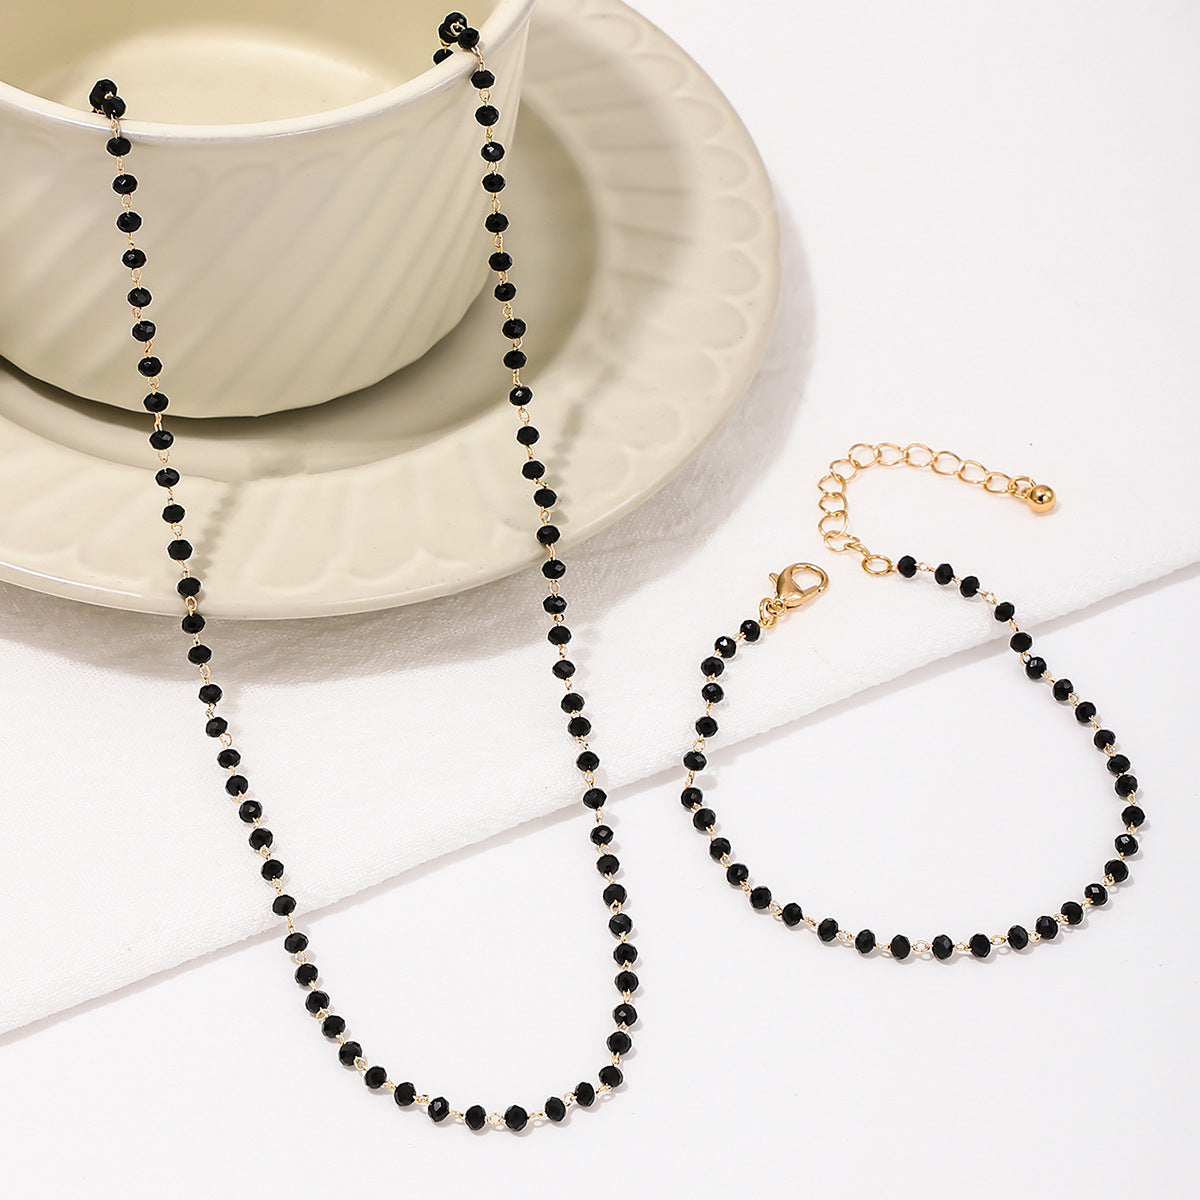 Metallic Glass Beaded Necklace and Bracelet Set - Elegant Jewelry Gift for Women